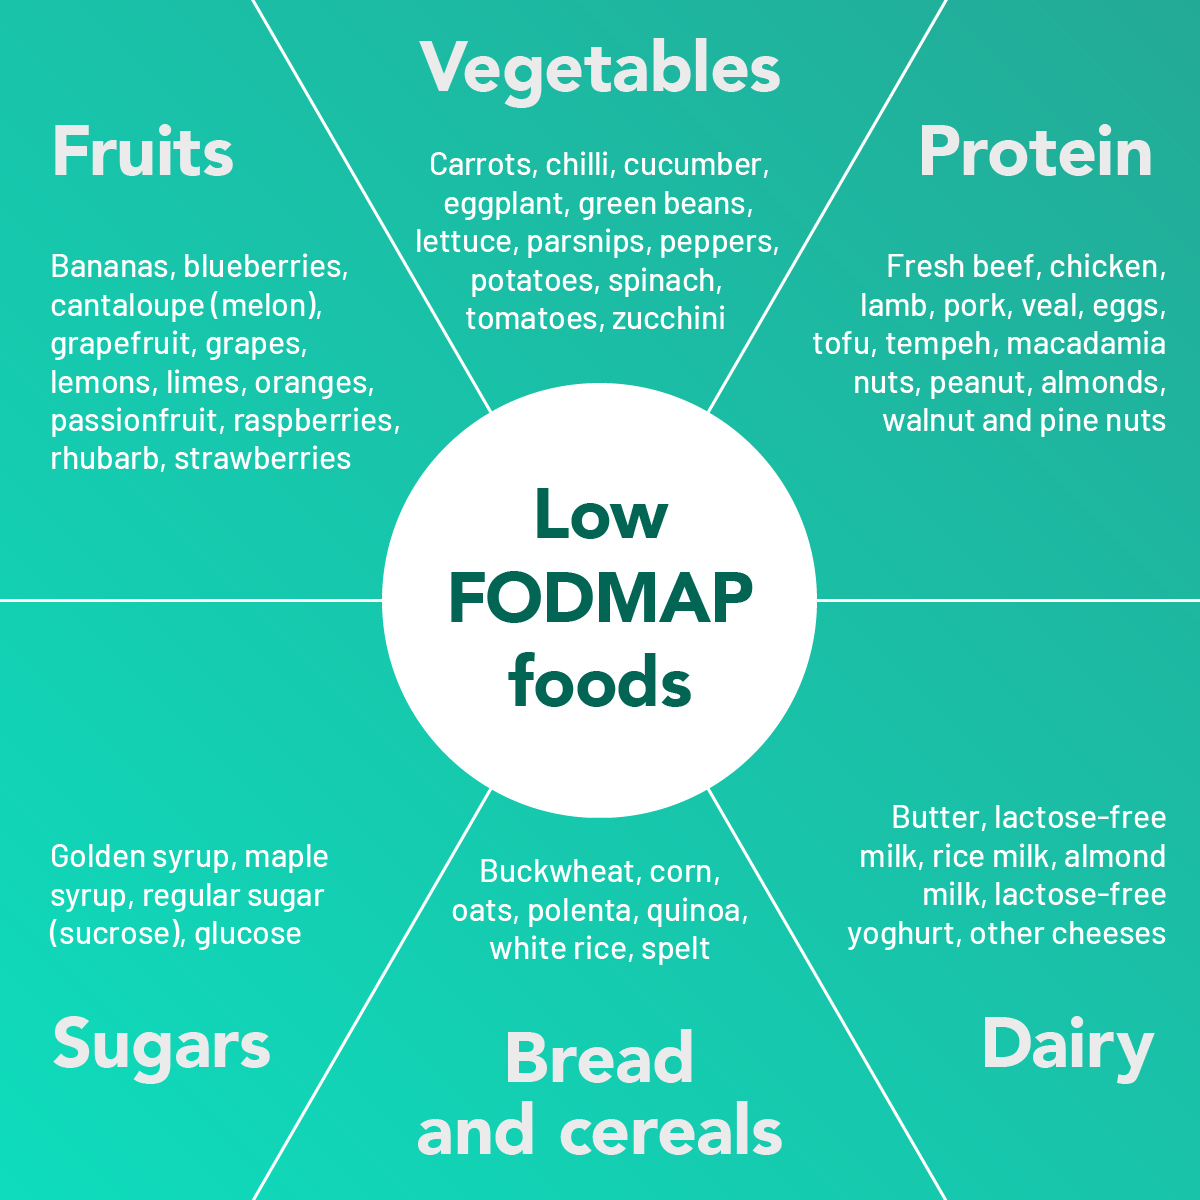 Low FODMAP foods